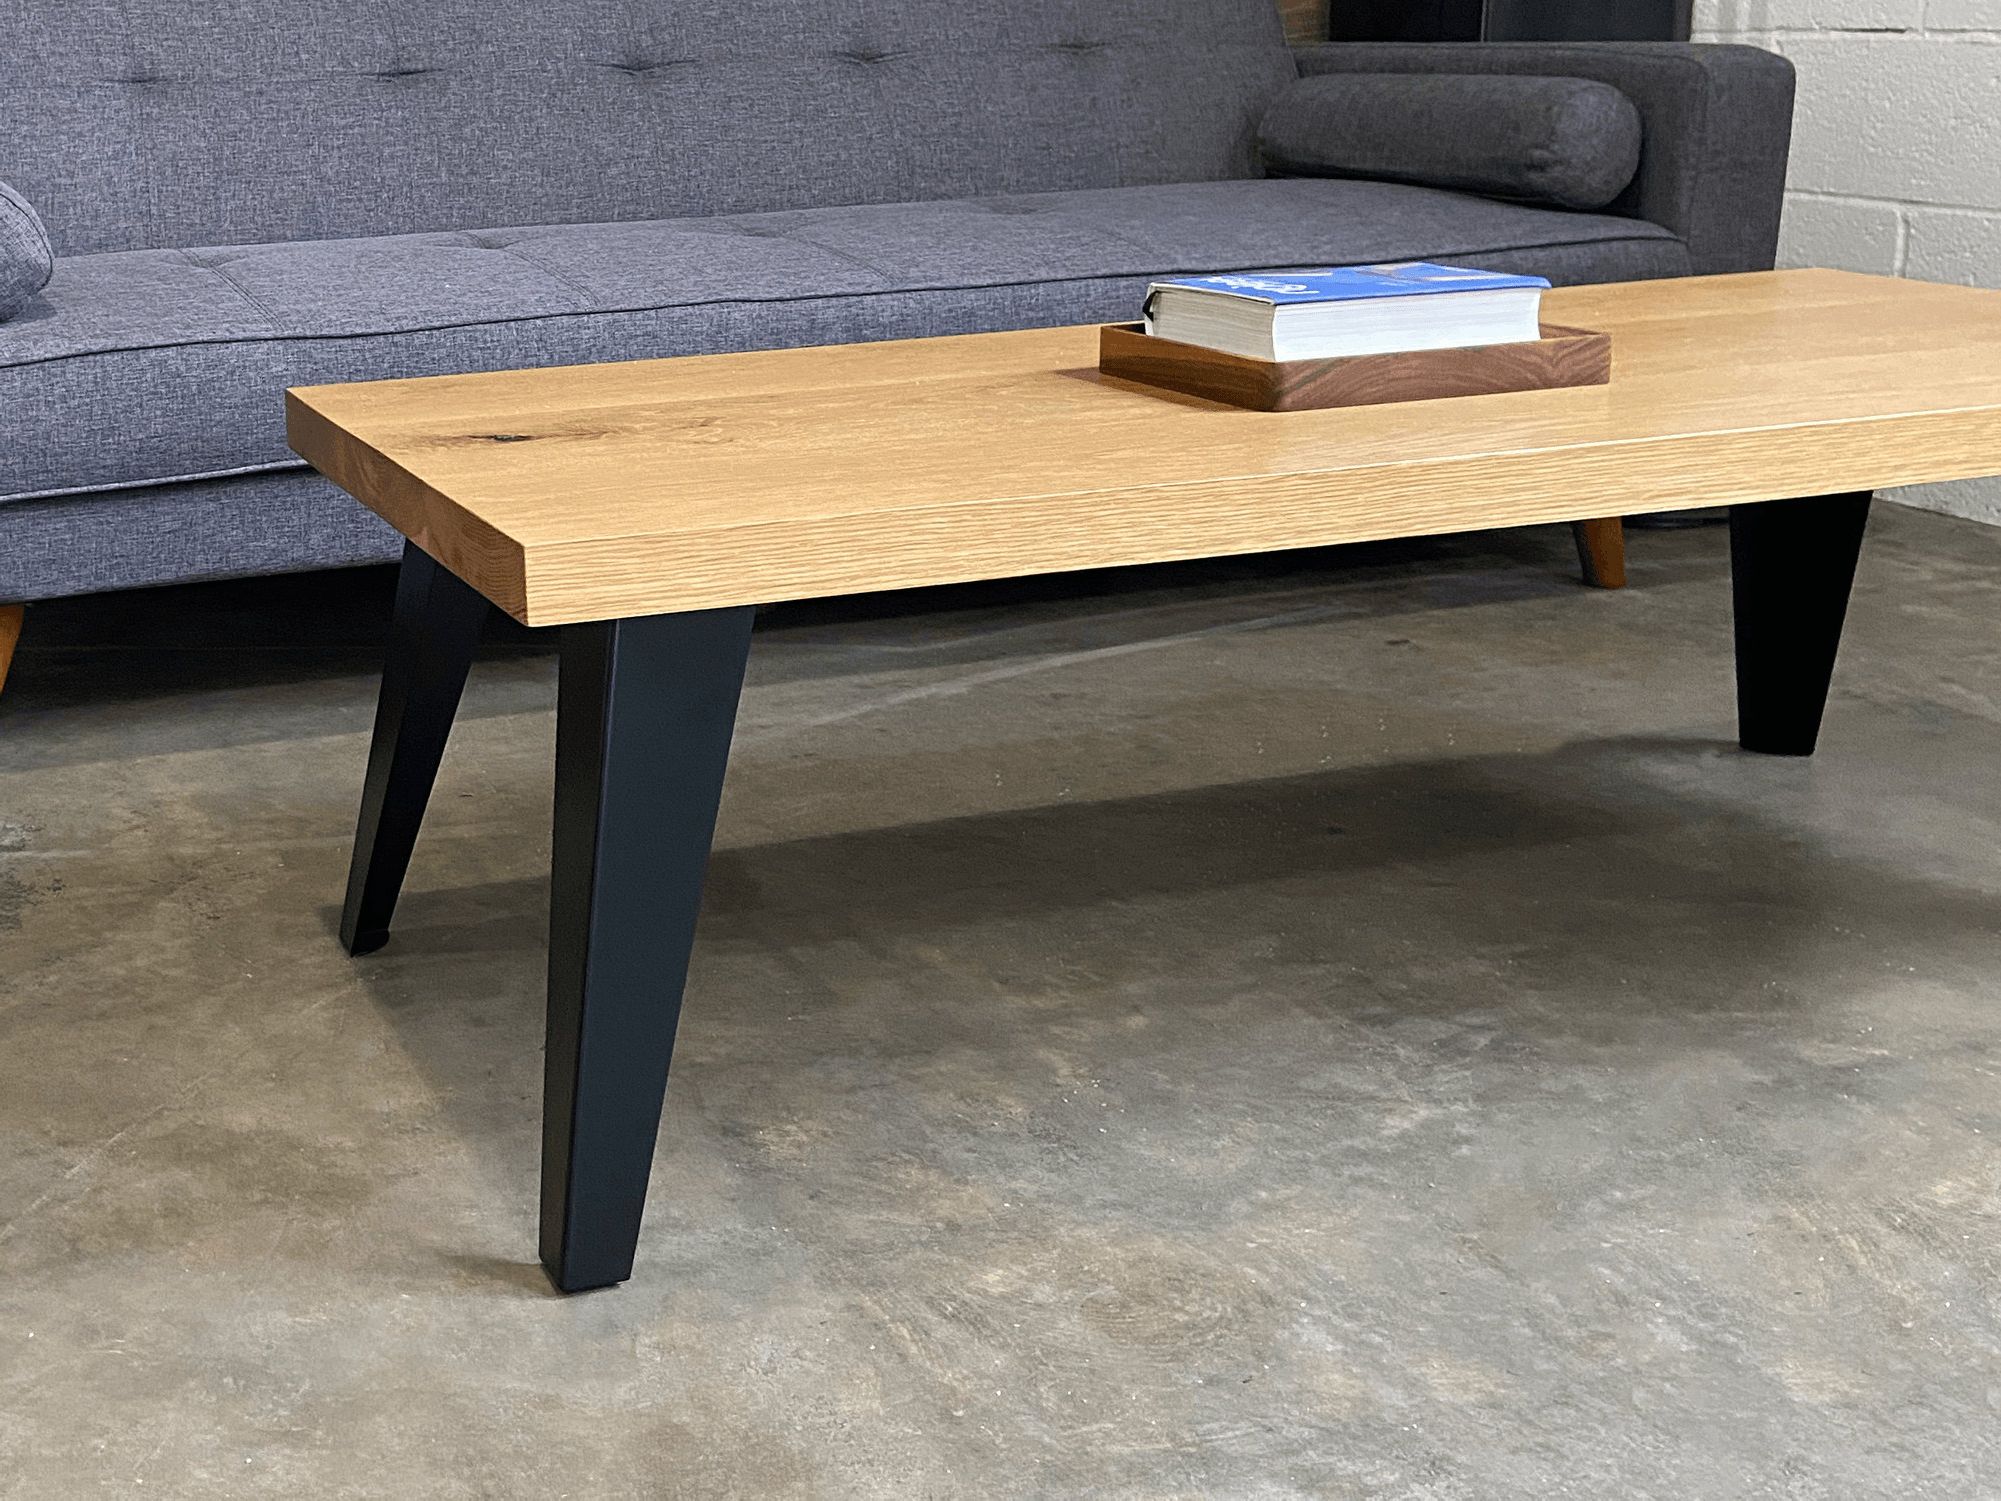 Fashionable Splayed Metal Legs Coffee Tables For Splayed Coffee Table Legs End Table Home Decor School Setup – Etsy (View 2 of 20)